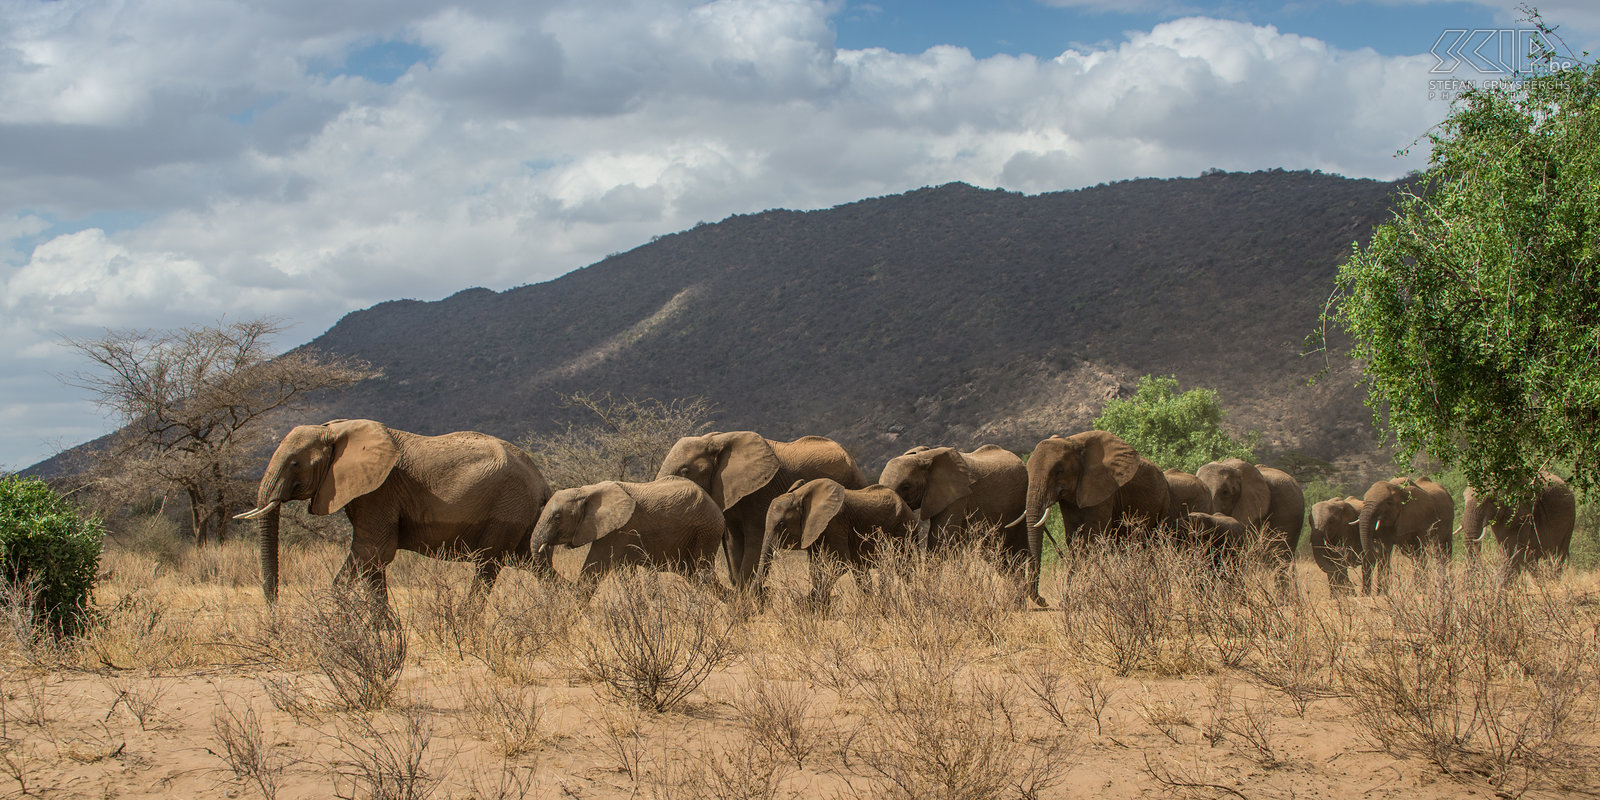 Samburu - Olifanten Een grote familie olifanten op pad. Stefan Cruysberghs